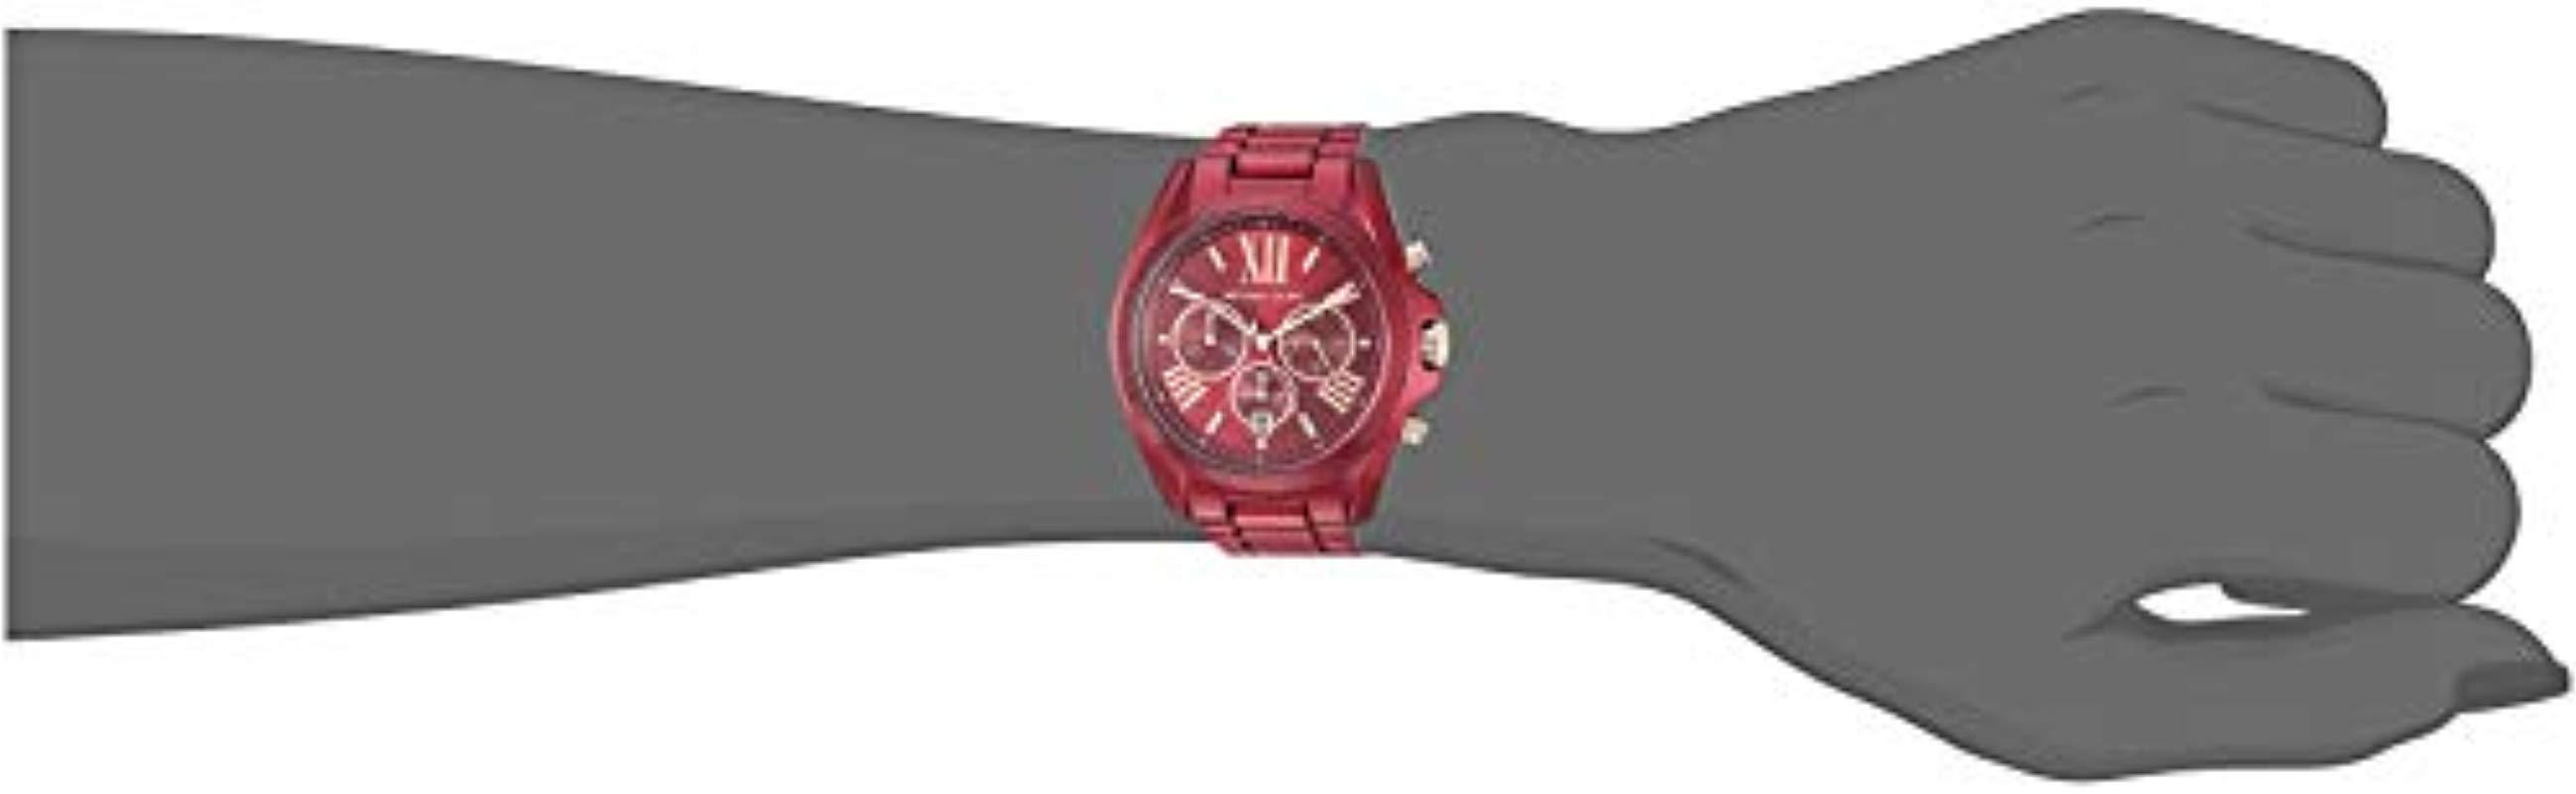 Michael Kors Bradshaw Quartz Watch With Stainless Steel Strap, Red, 21.6  (model: Mk6724) | Lyst